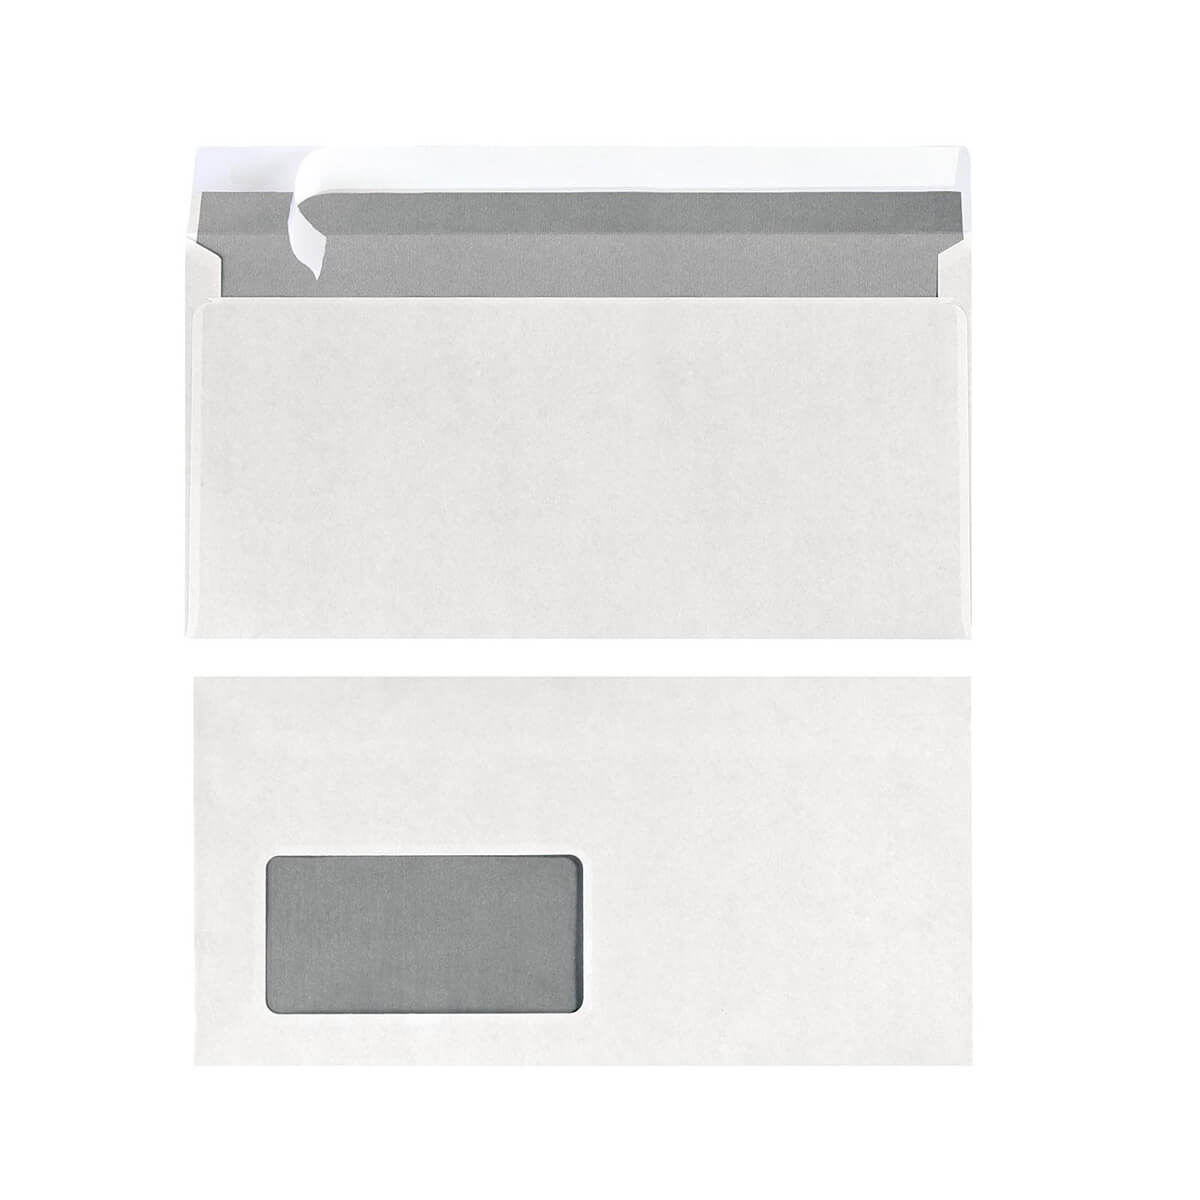 25x Herlitz Envelope DIN lang, white, windowed